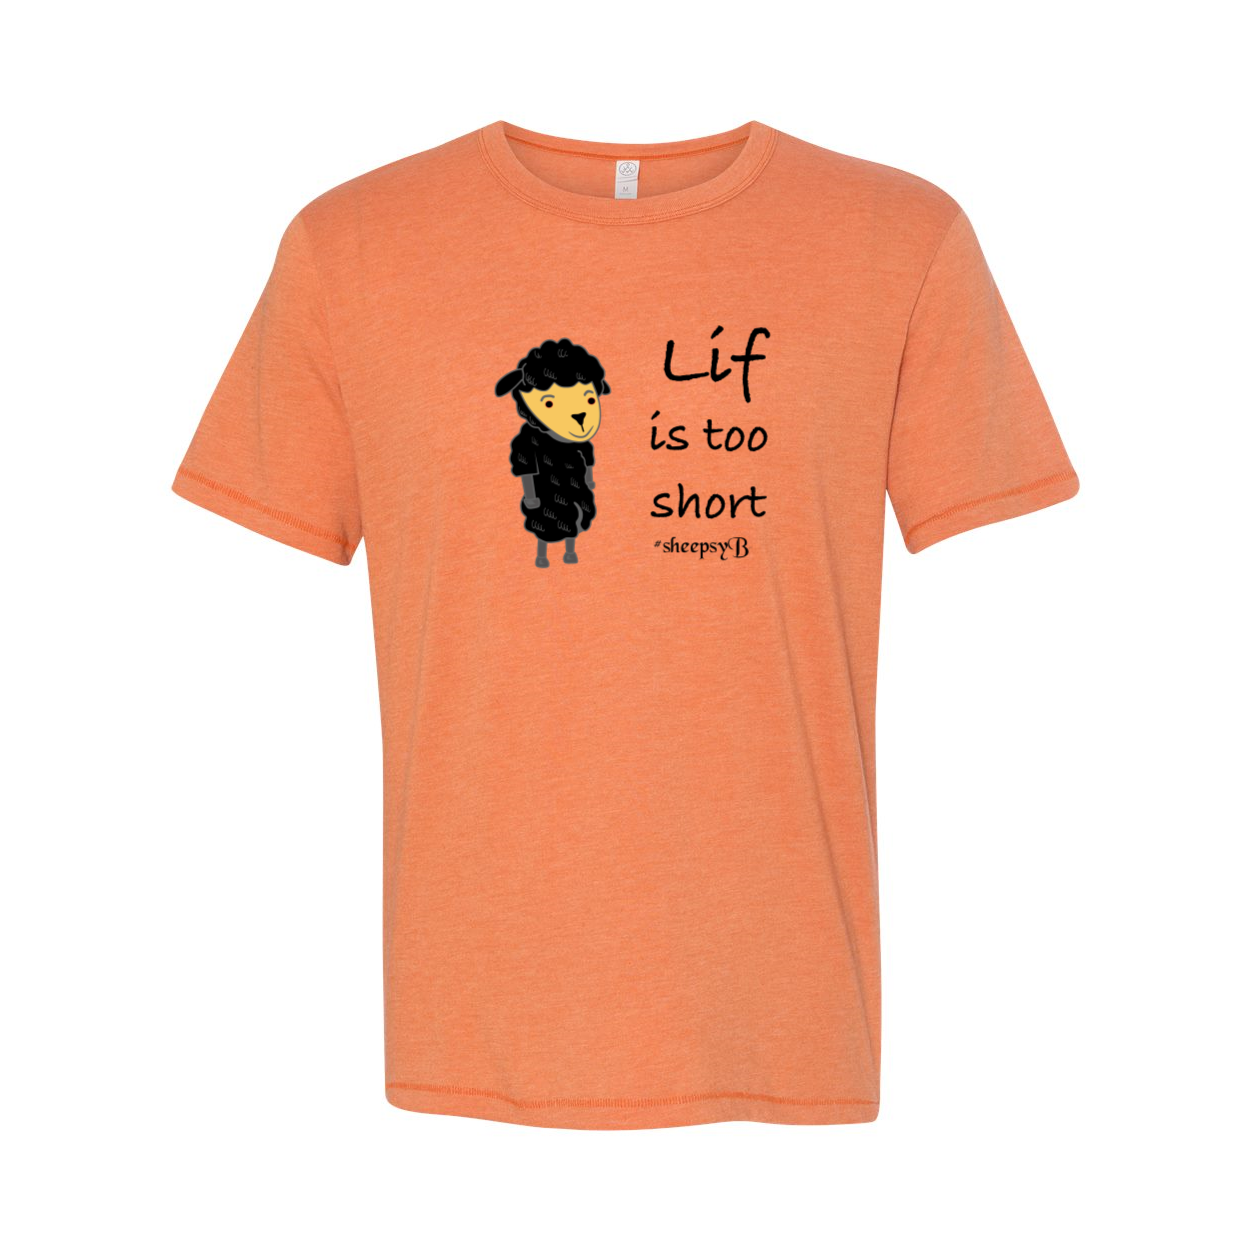 Lif is Too Short T-Shirt / Sheepsy B - Chloe Lambertin